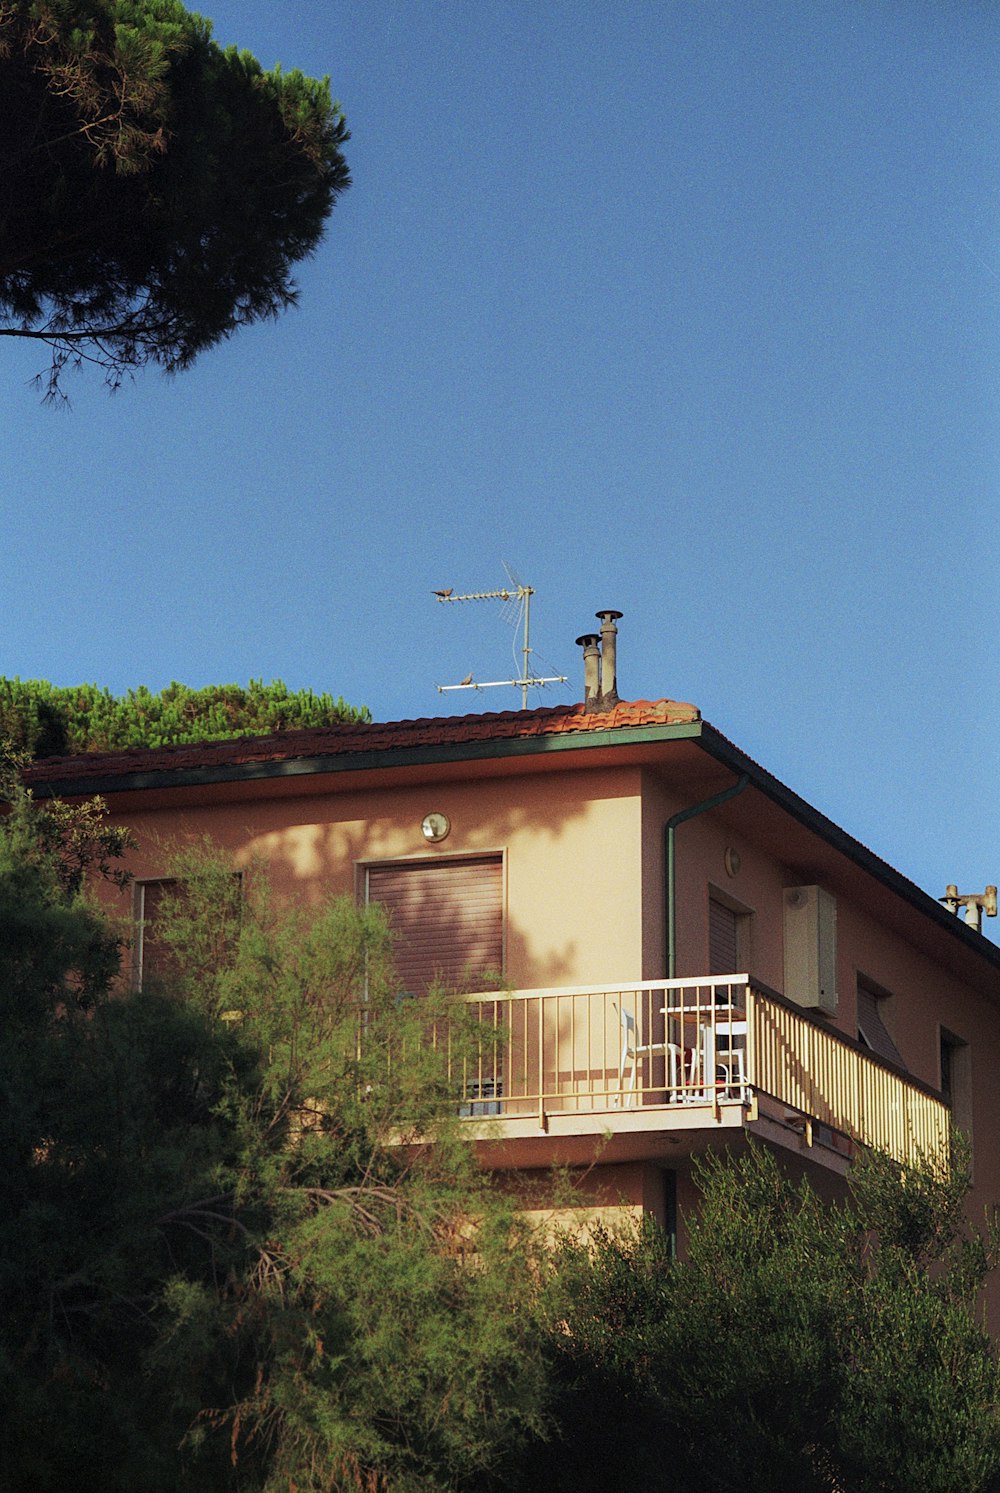 a house on a hill with a balcony